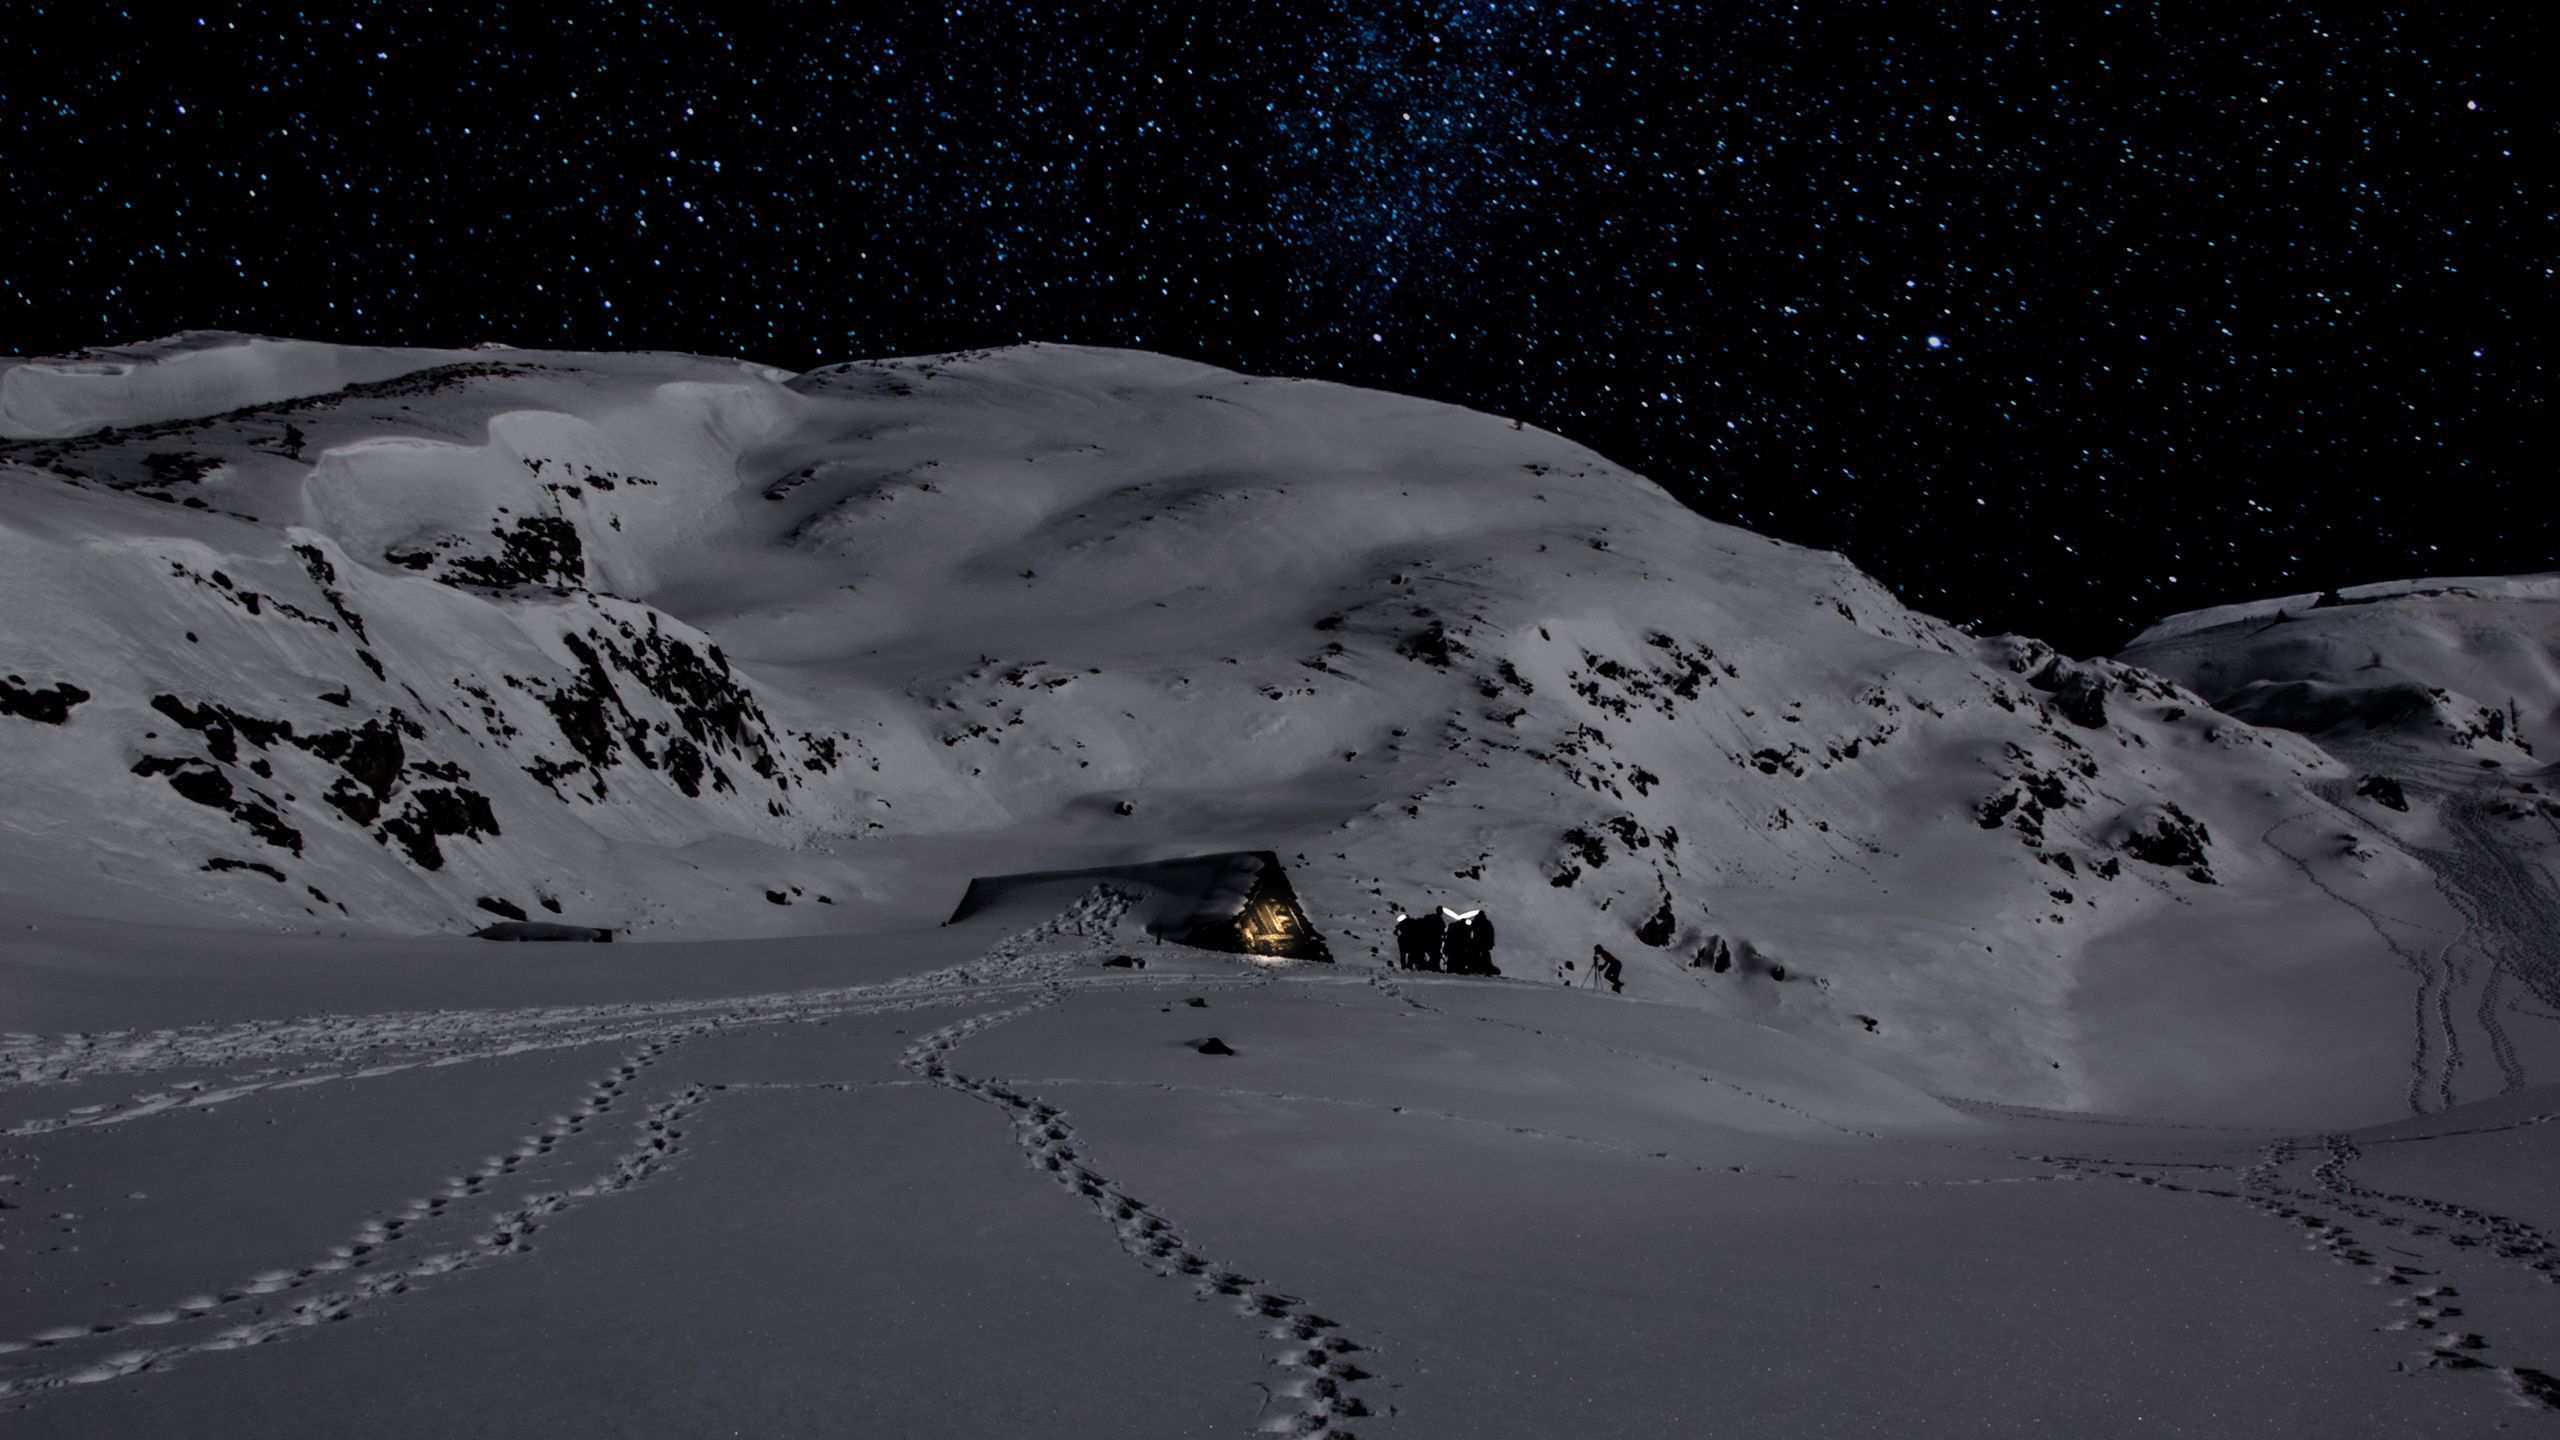 Download wallpaper 2560x1440 night, snow, mountains, footprints, winter widescreen 16:9 HD background